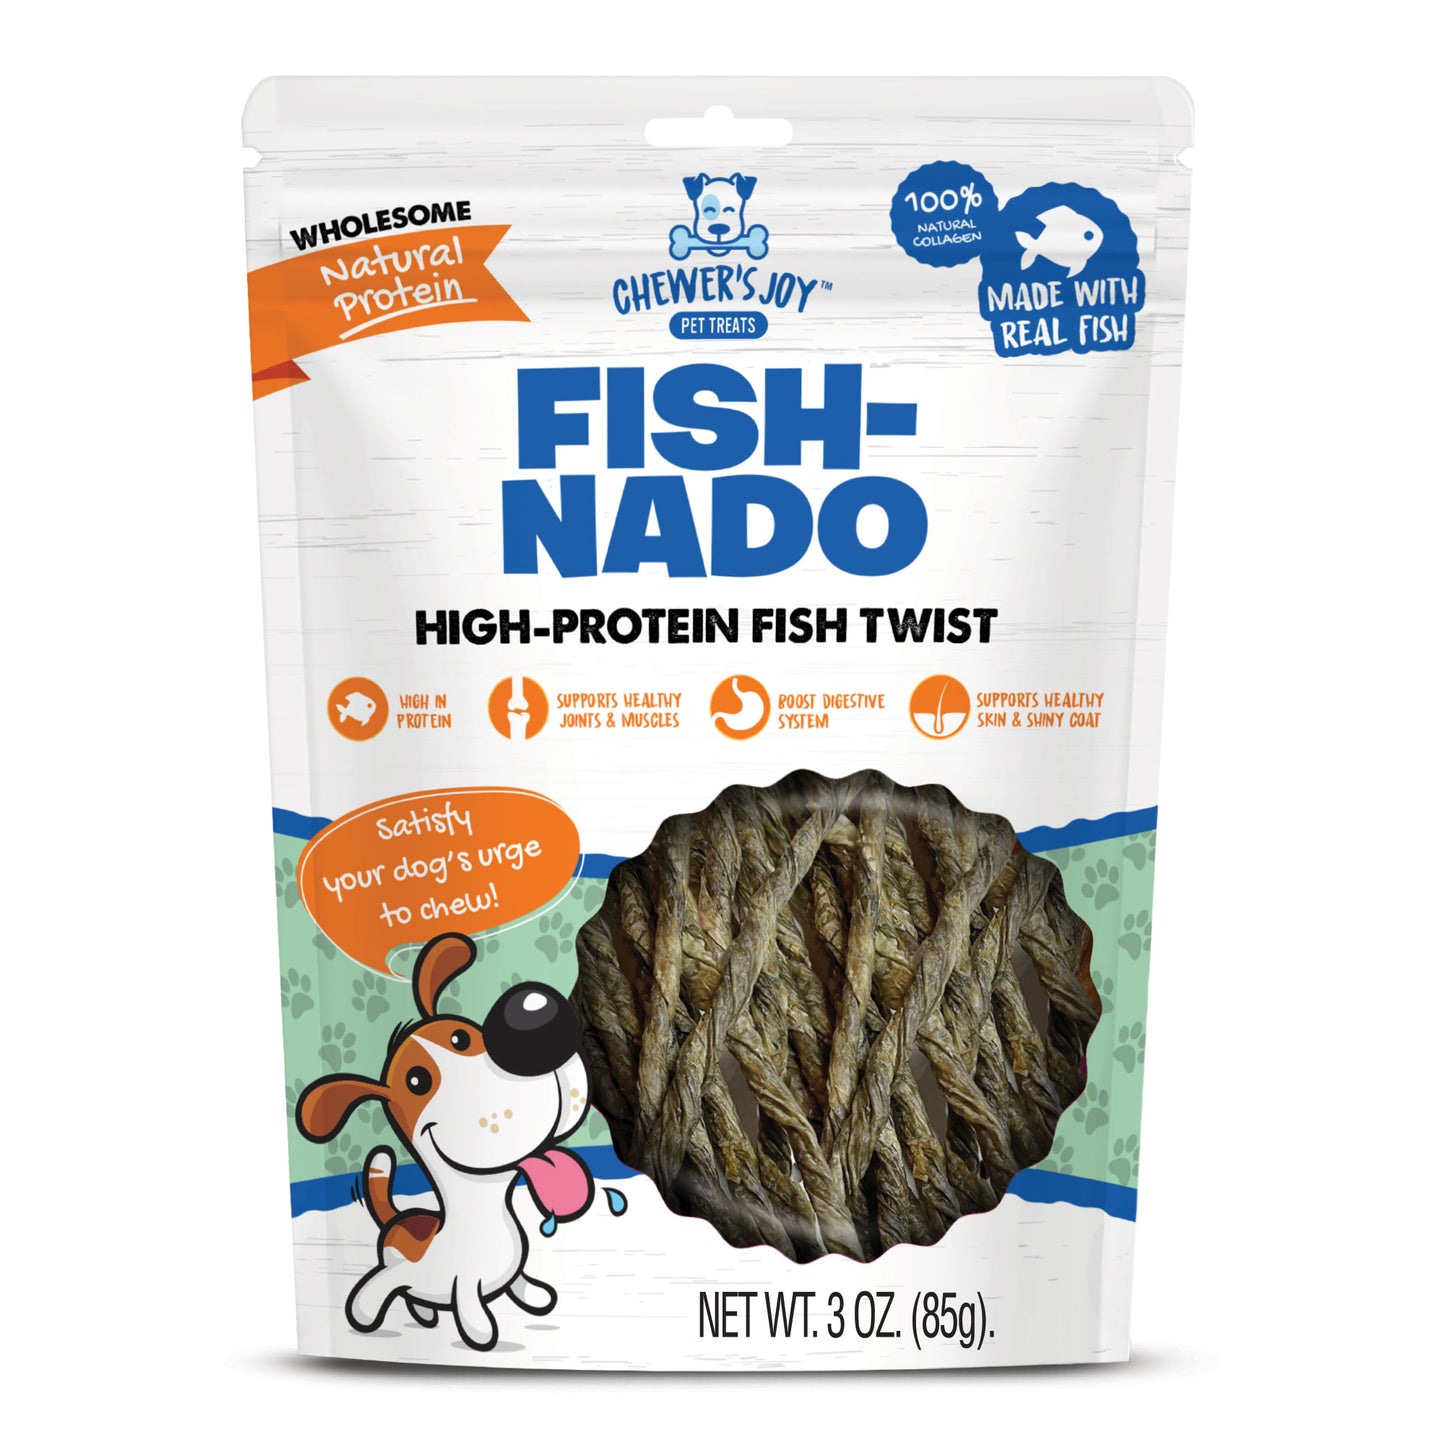 Chewer's Joy Fish-Nado dog treats